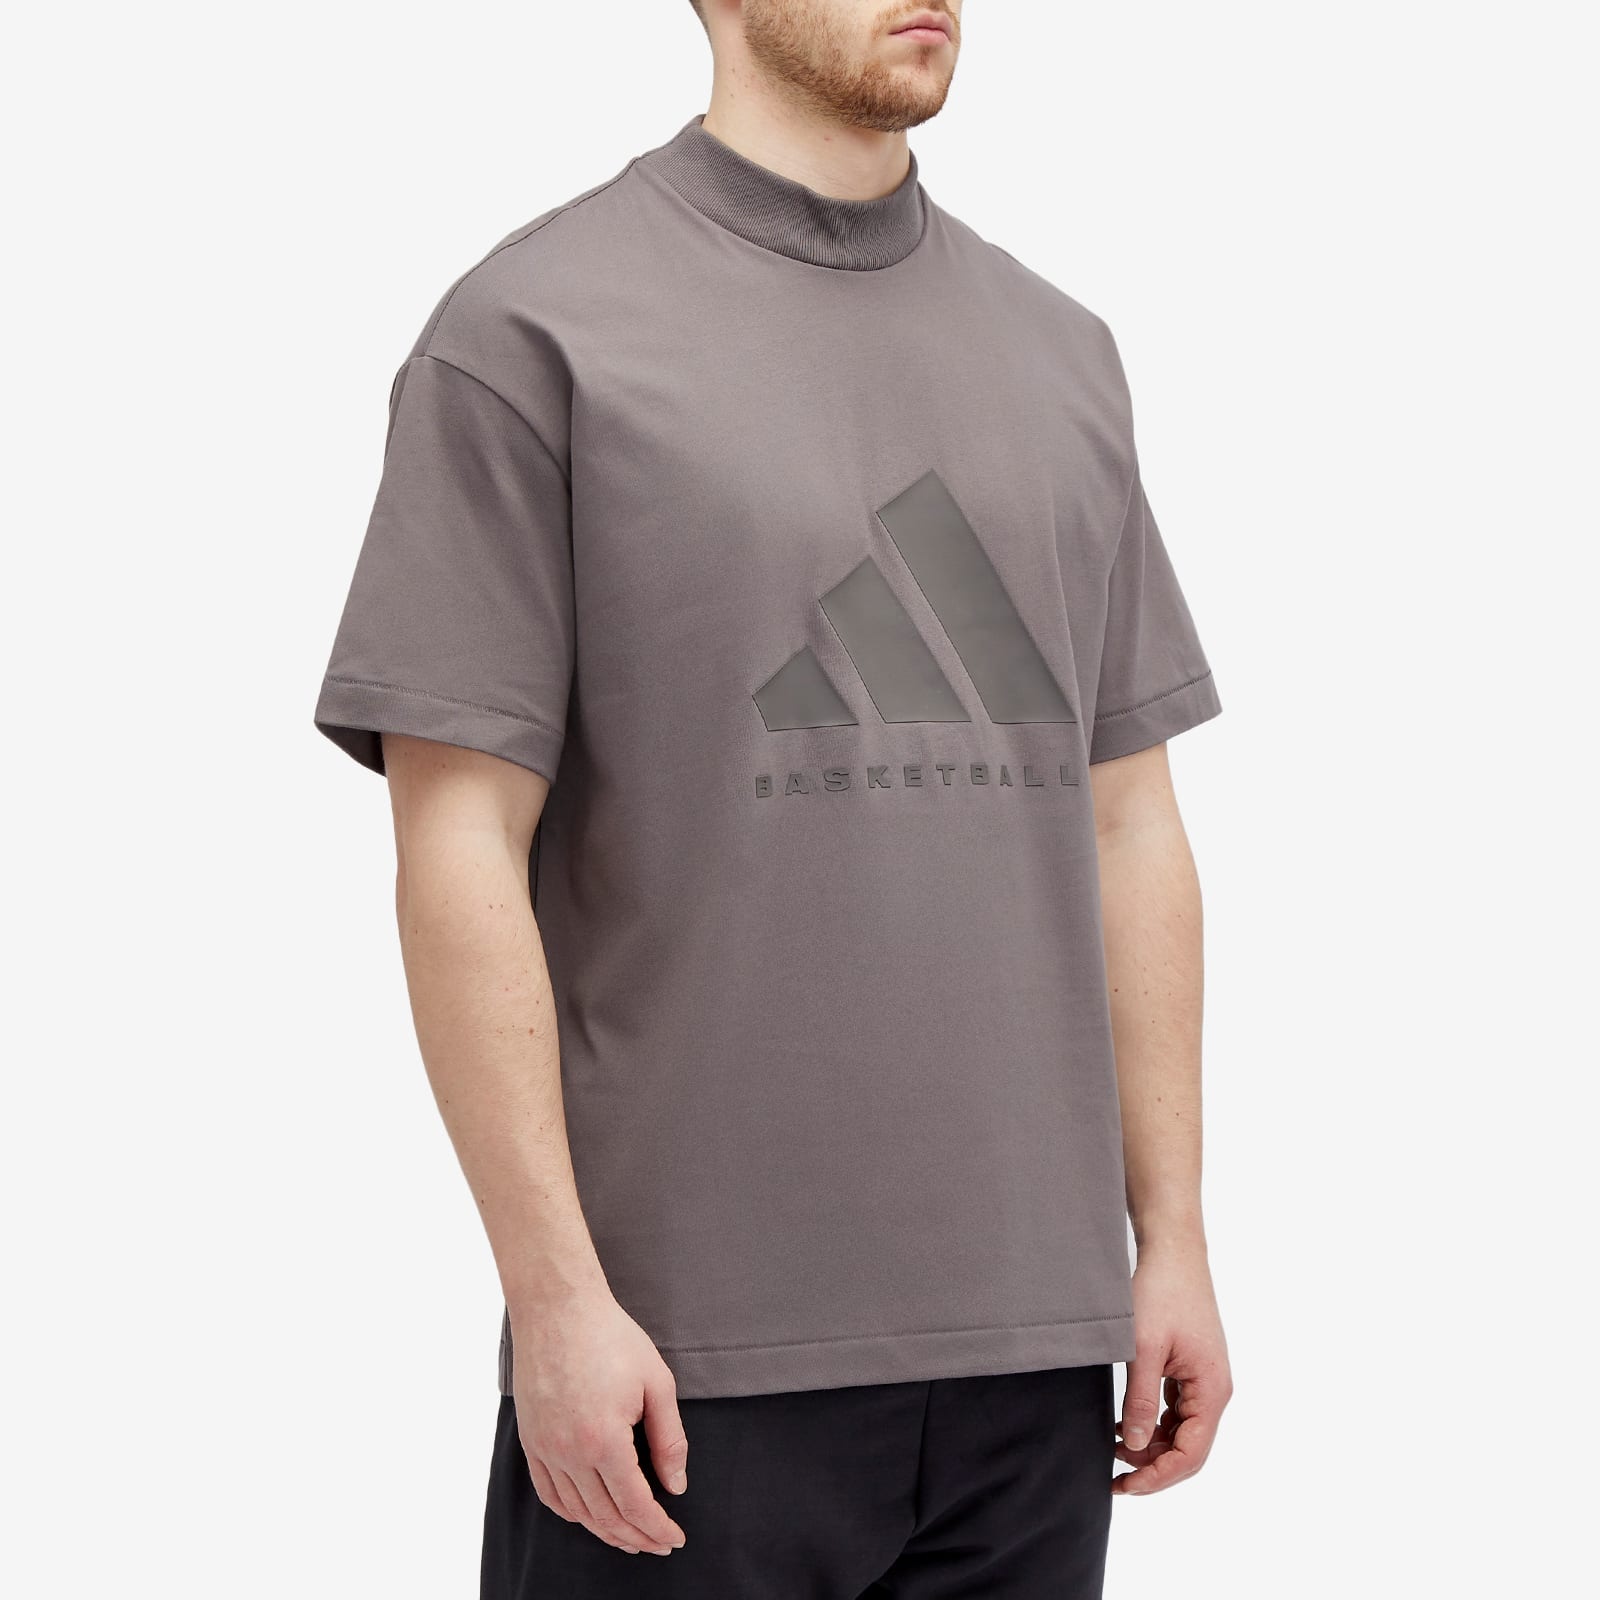 Adidas BASKETBALL T-Shirts - 2